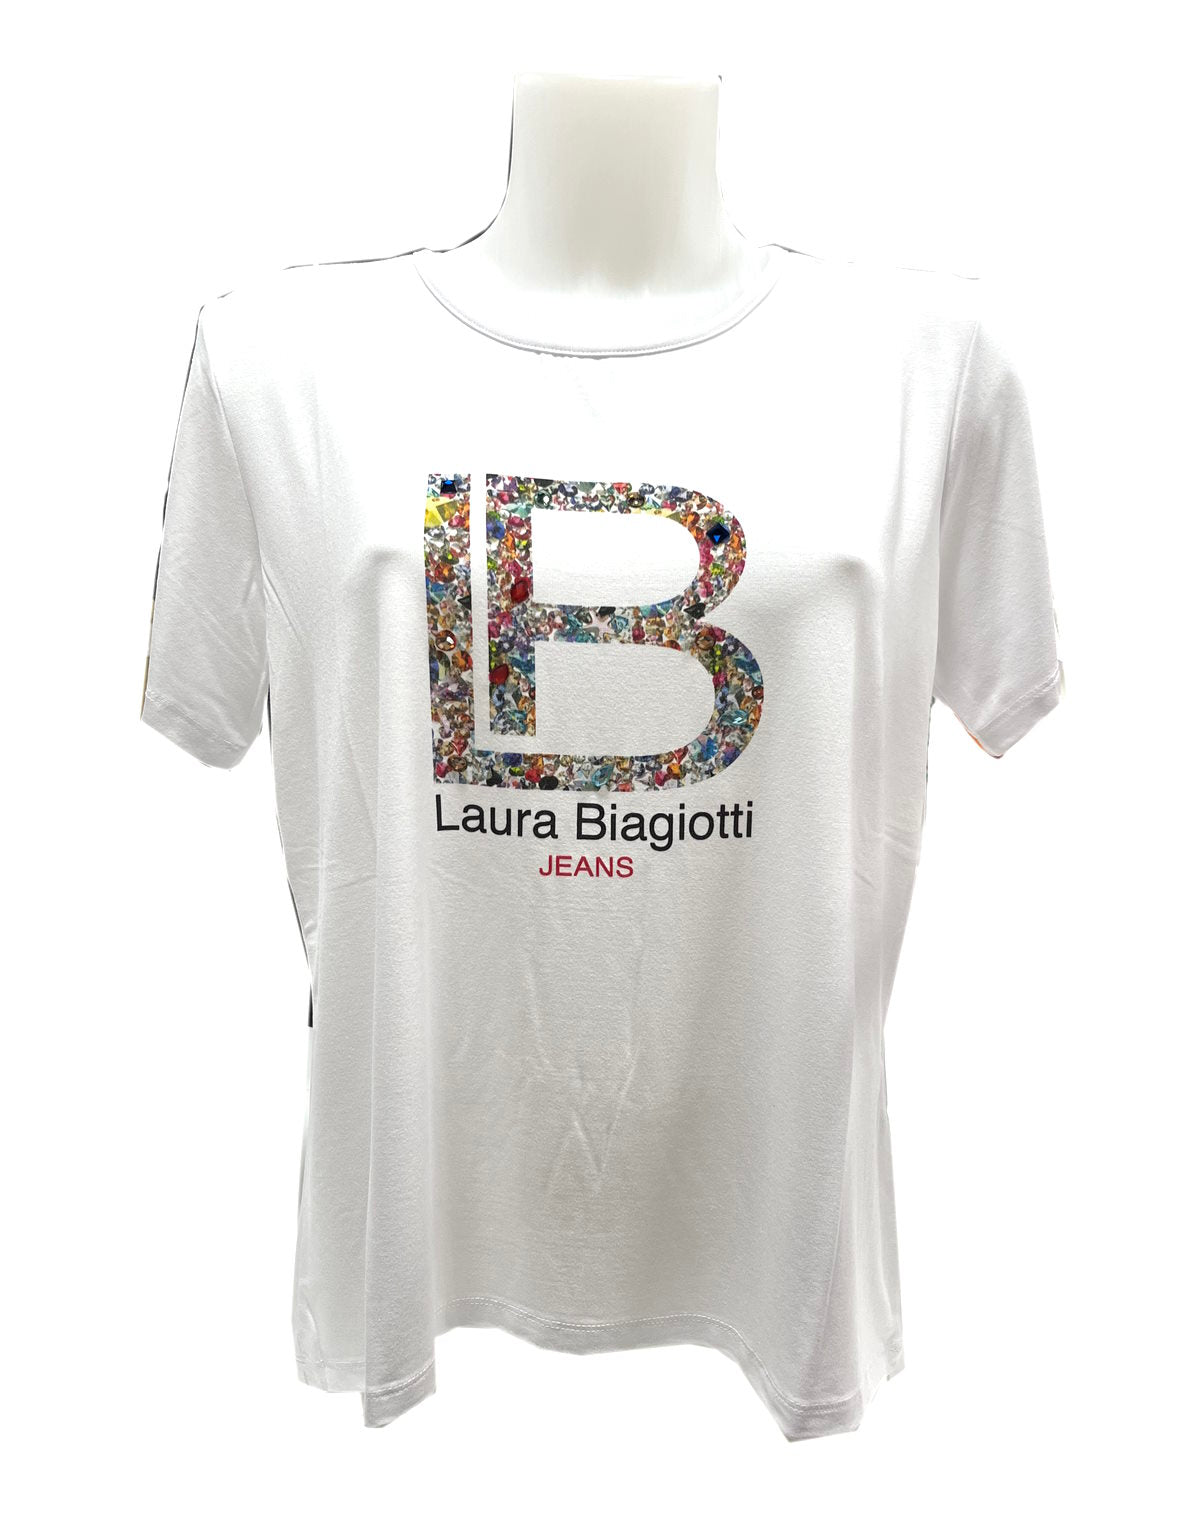 T-shirt, Brand Laura Biagiotti, Made in Italy, art. JLB02-214